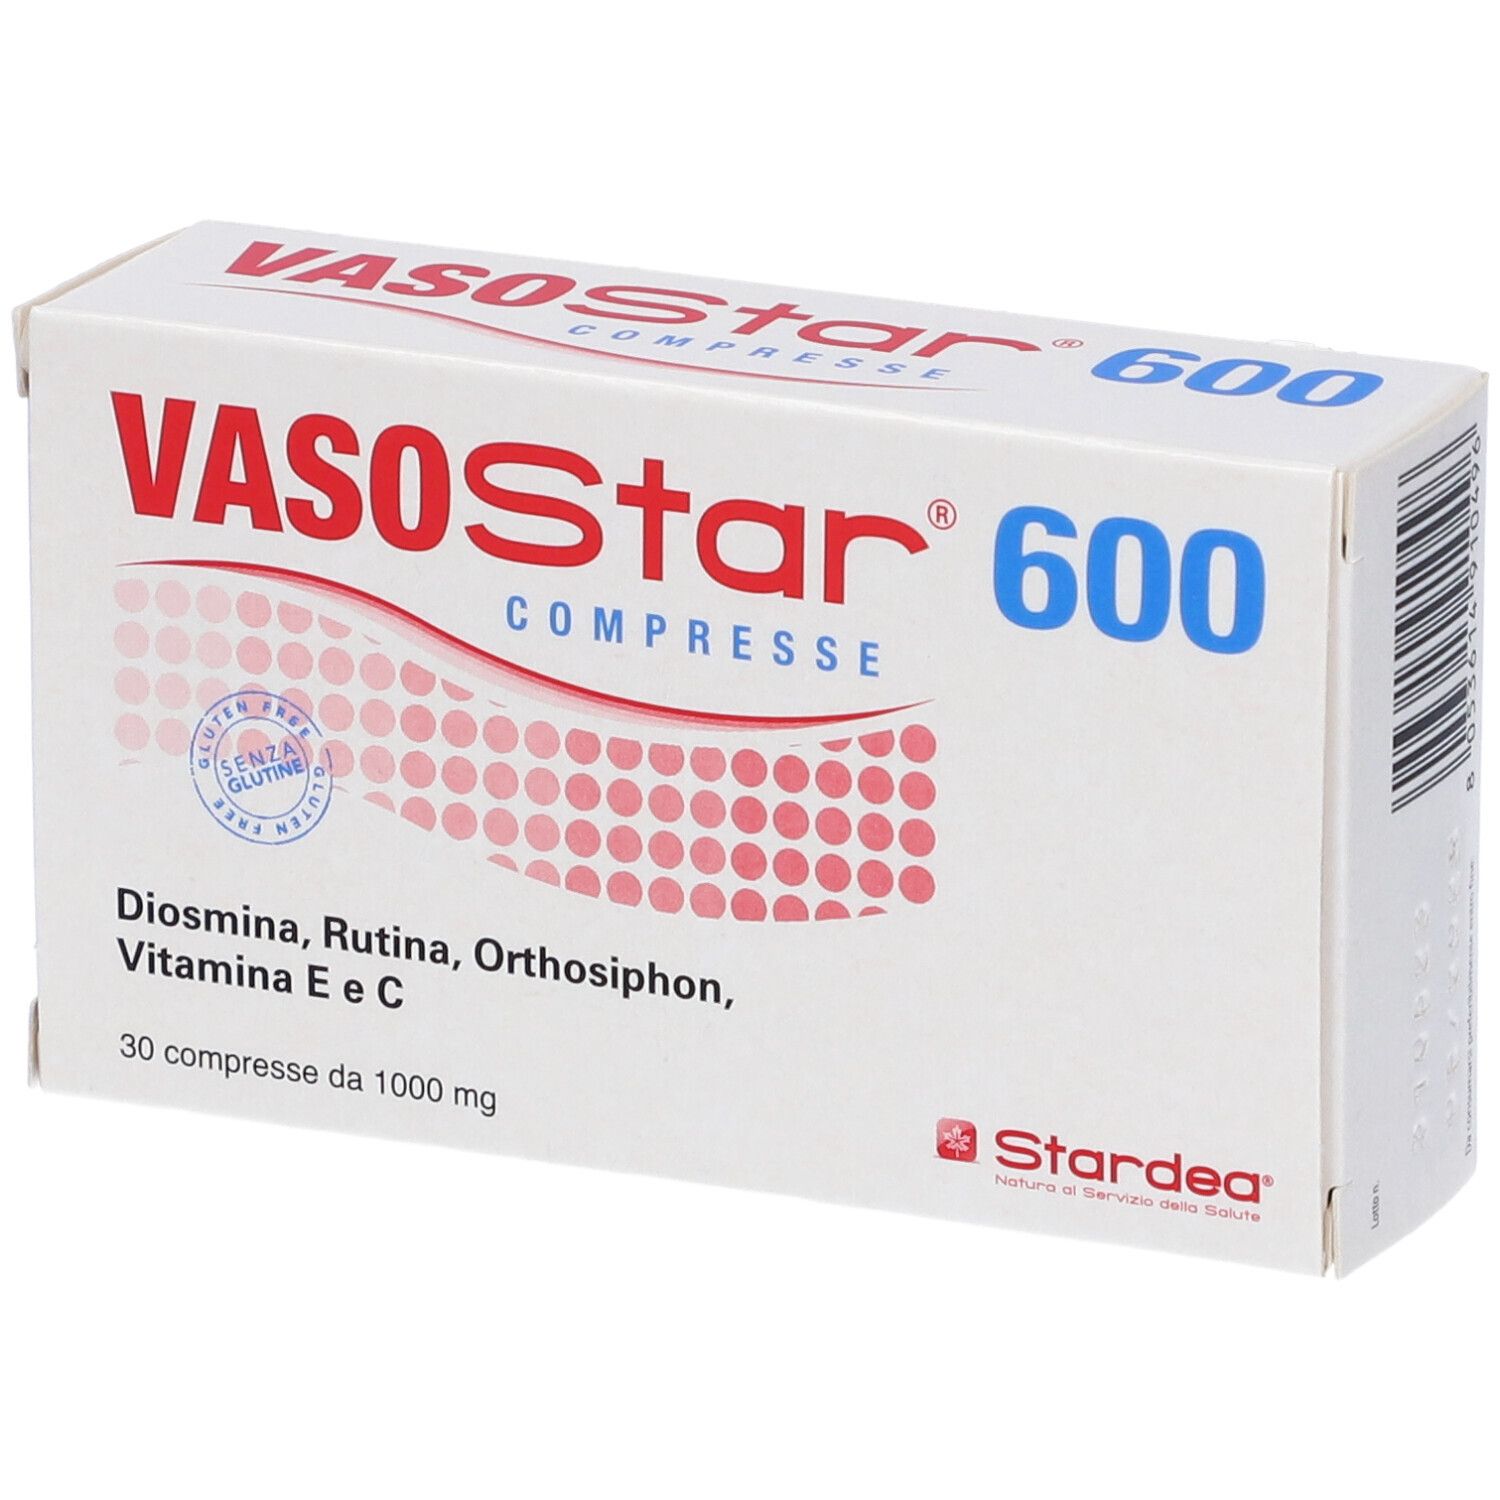 Vasostar® 600 Compresse